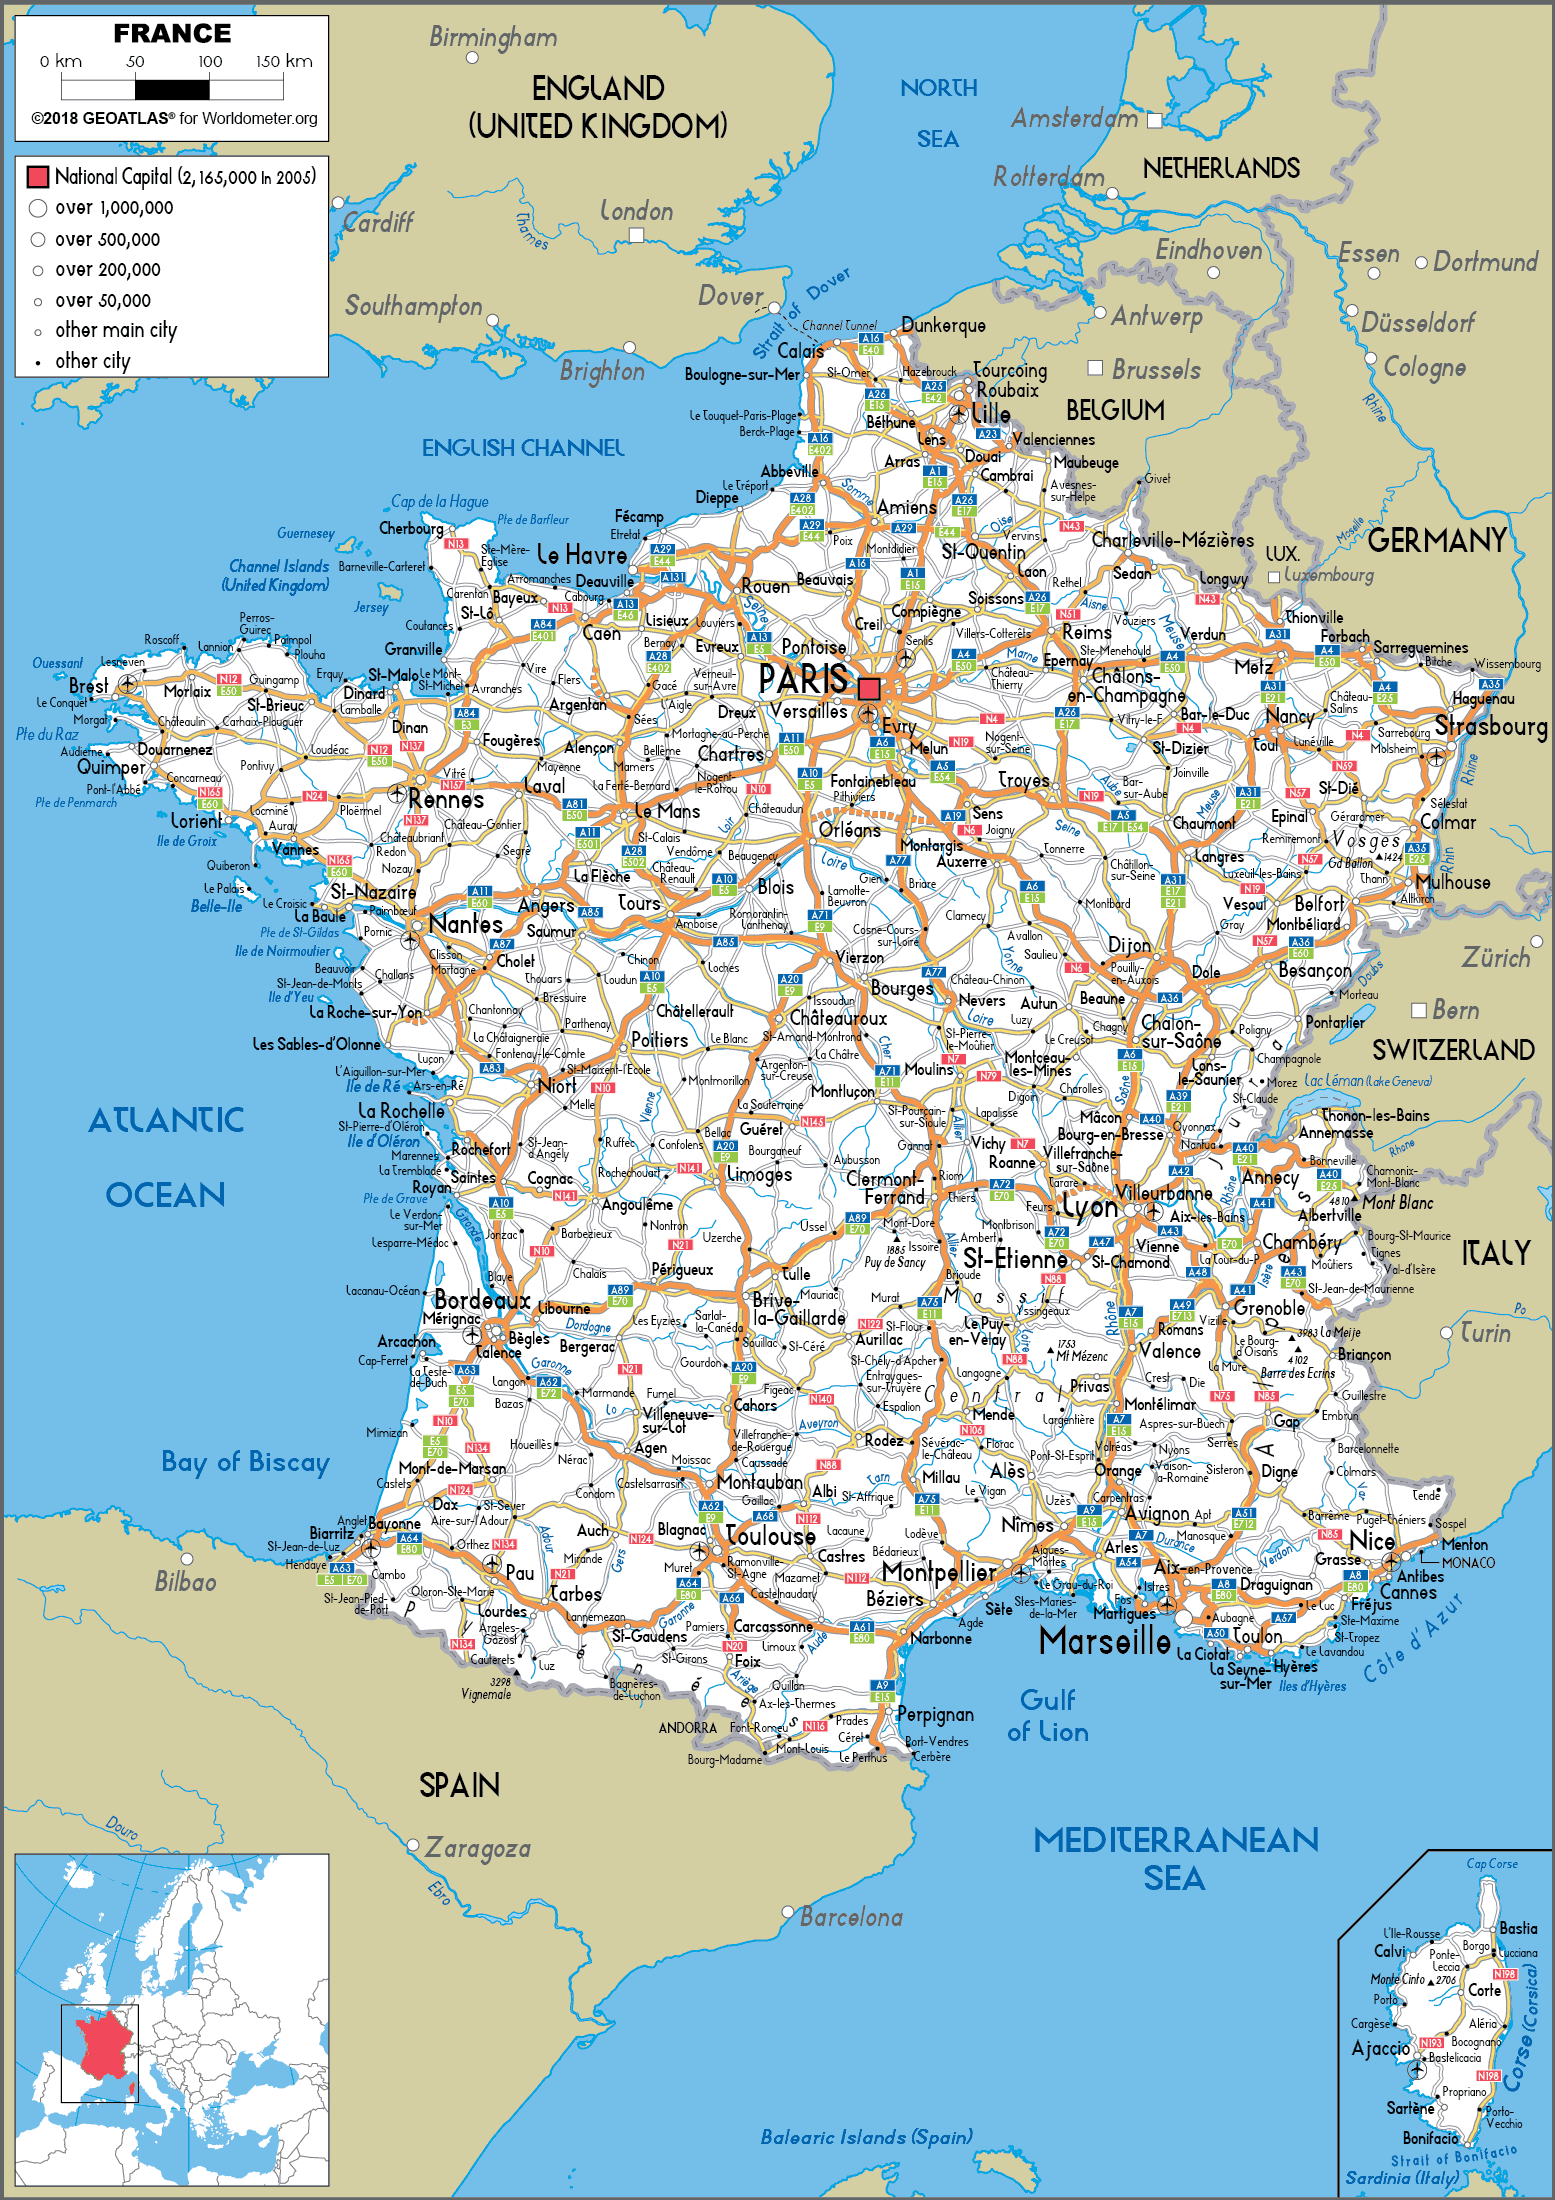 Rac Maps Of France